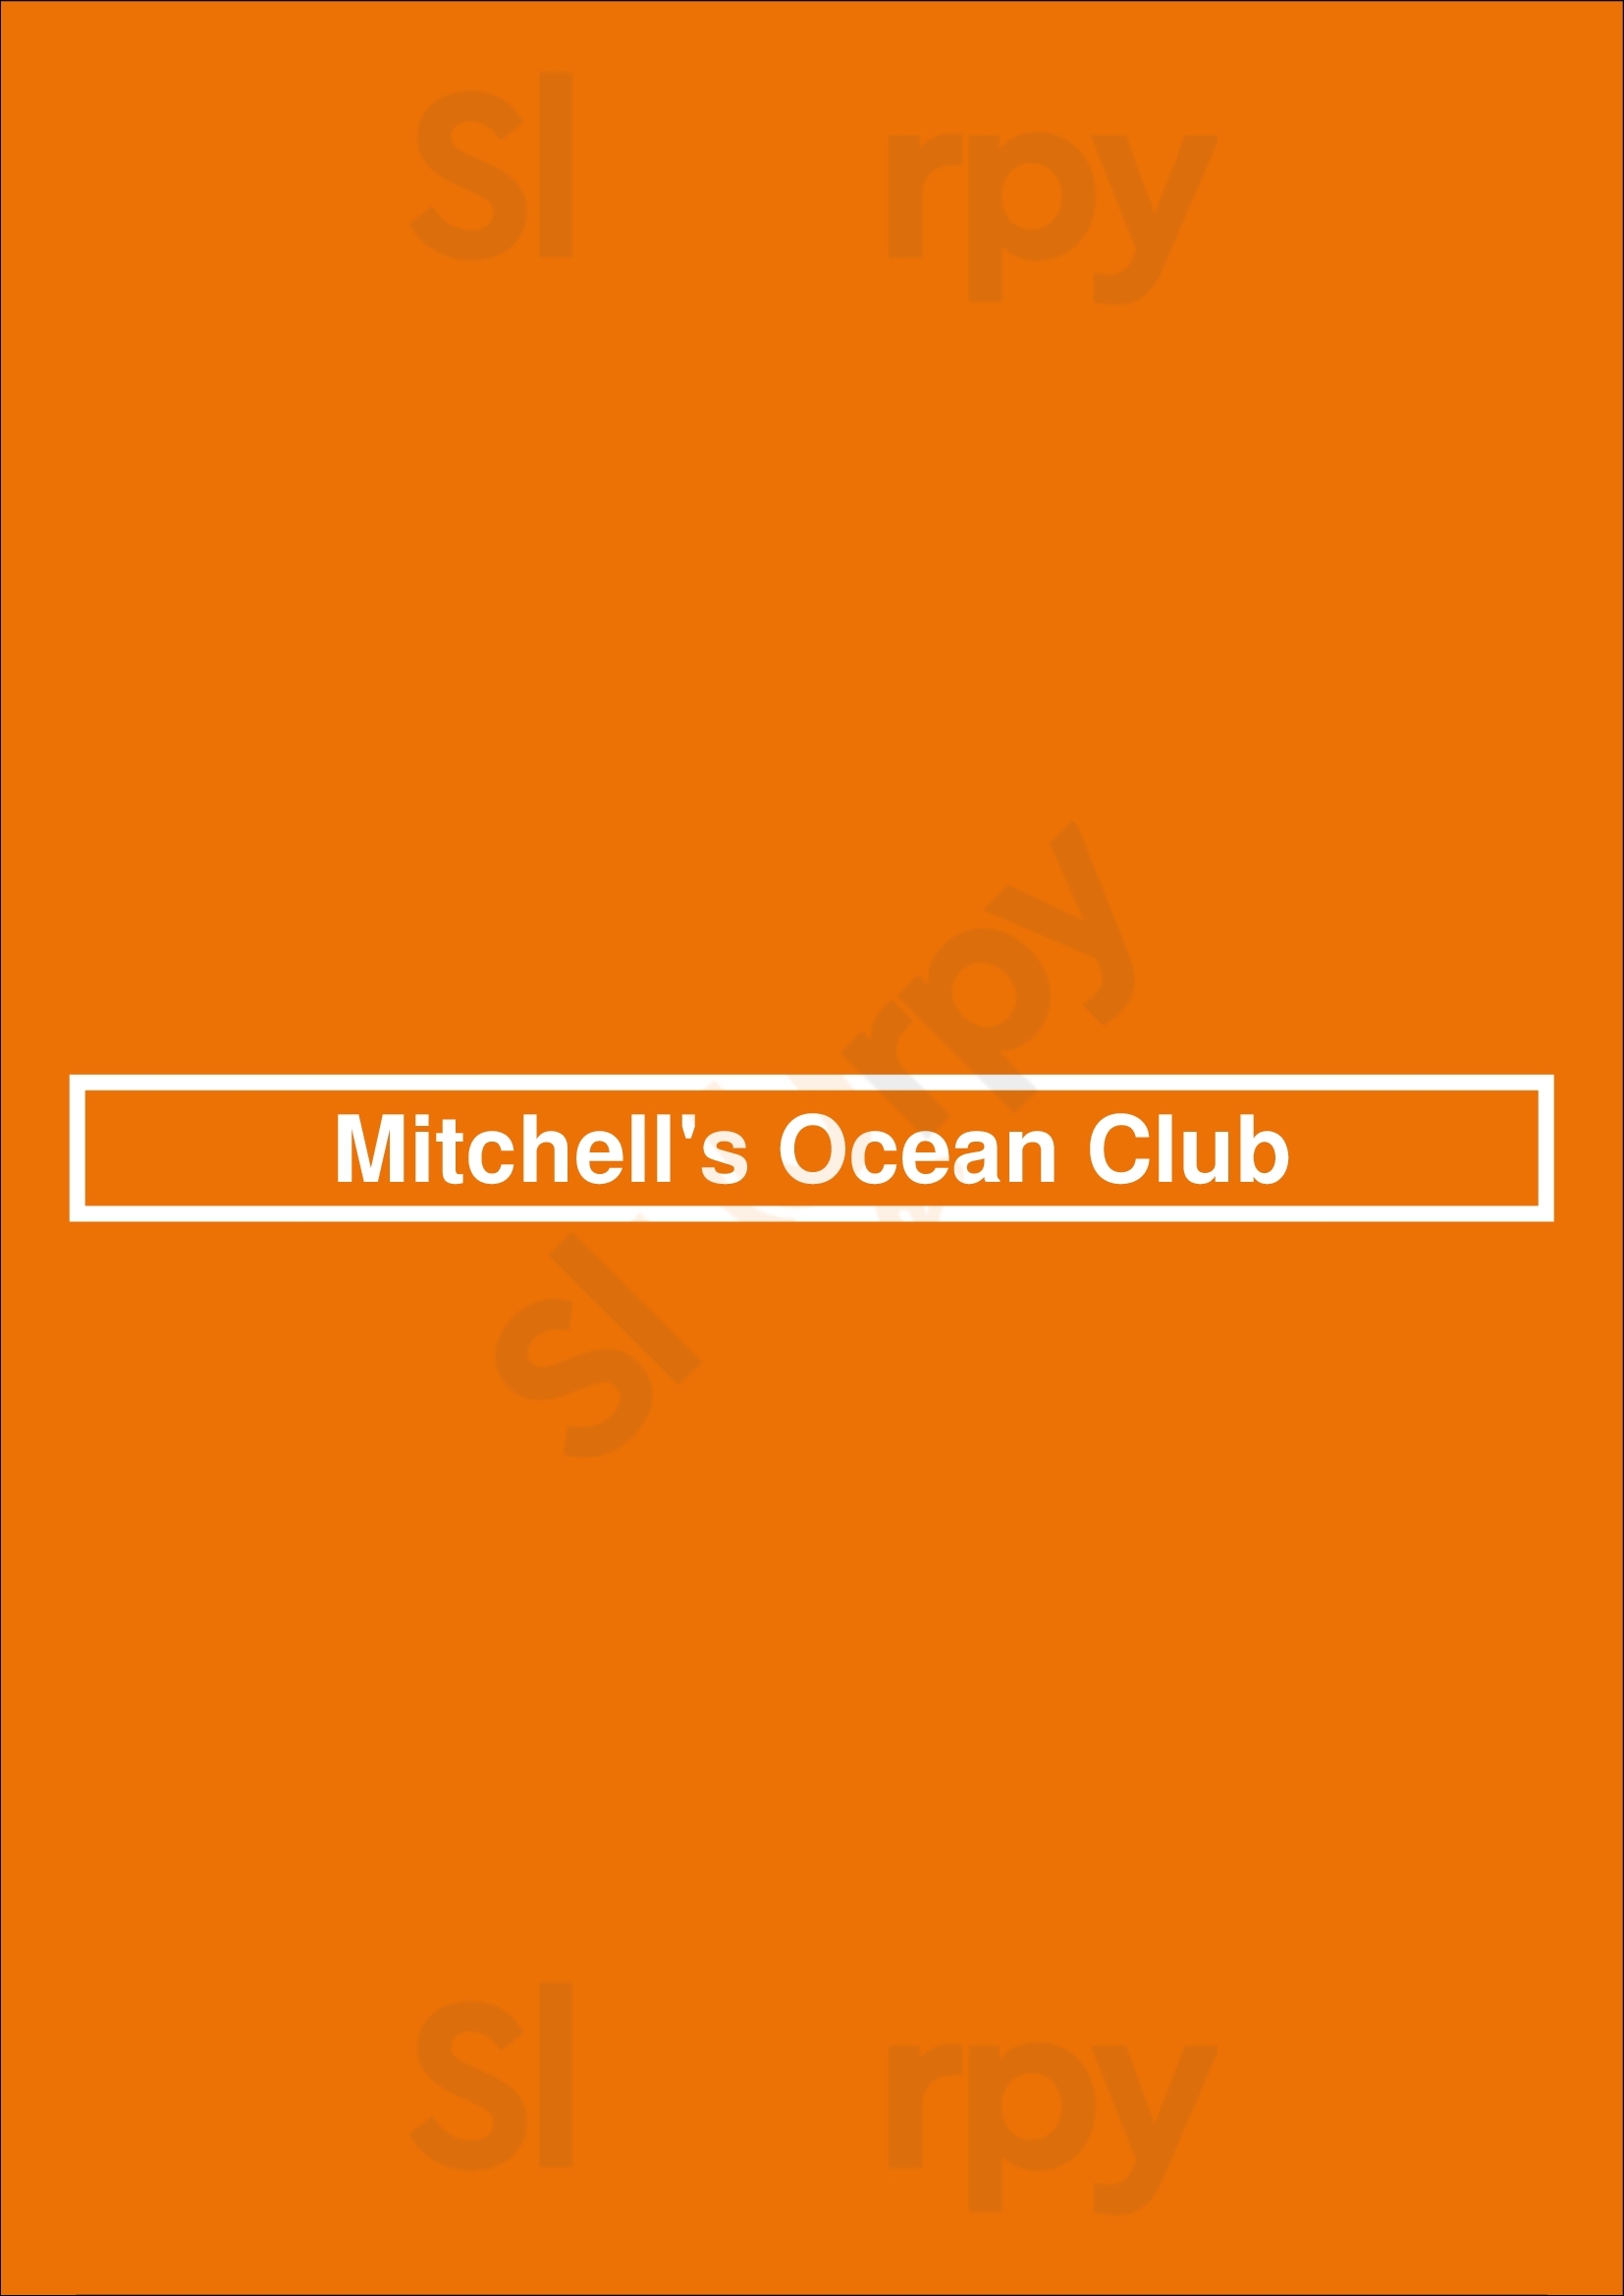 Mitchell's Ocean Club Columbus Menu - 1